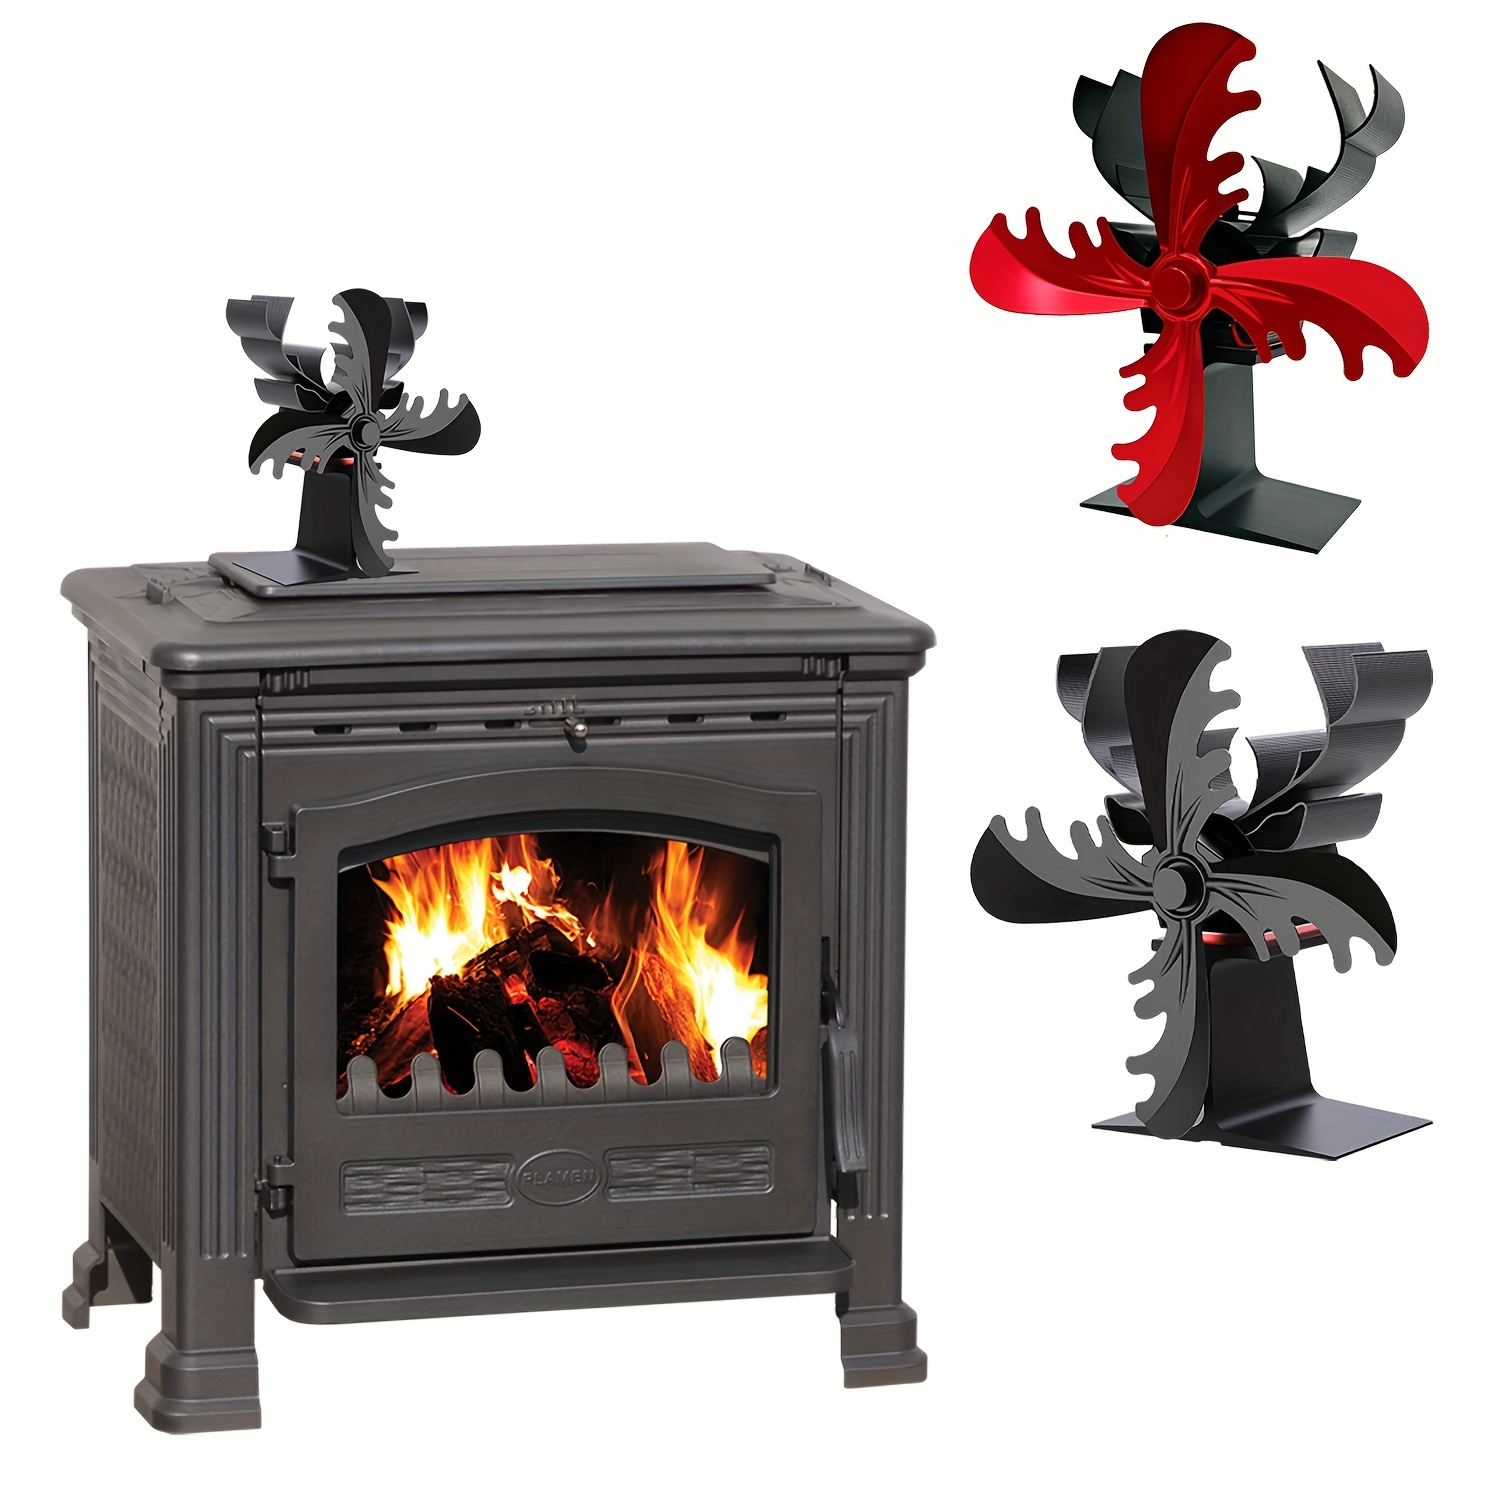 Ecofan Stove Fans: Cold, Warm, Hot - Fireplace Designs